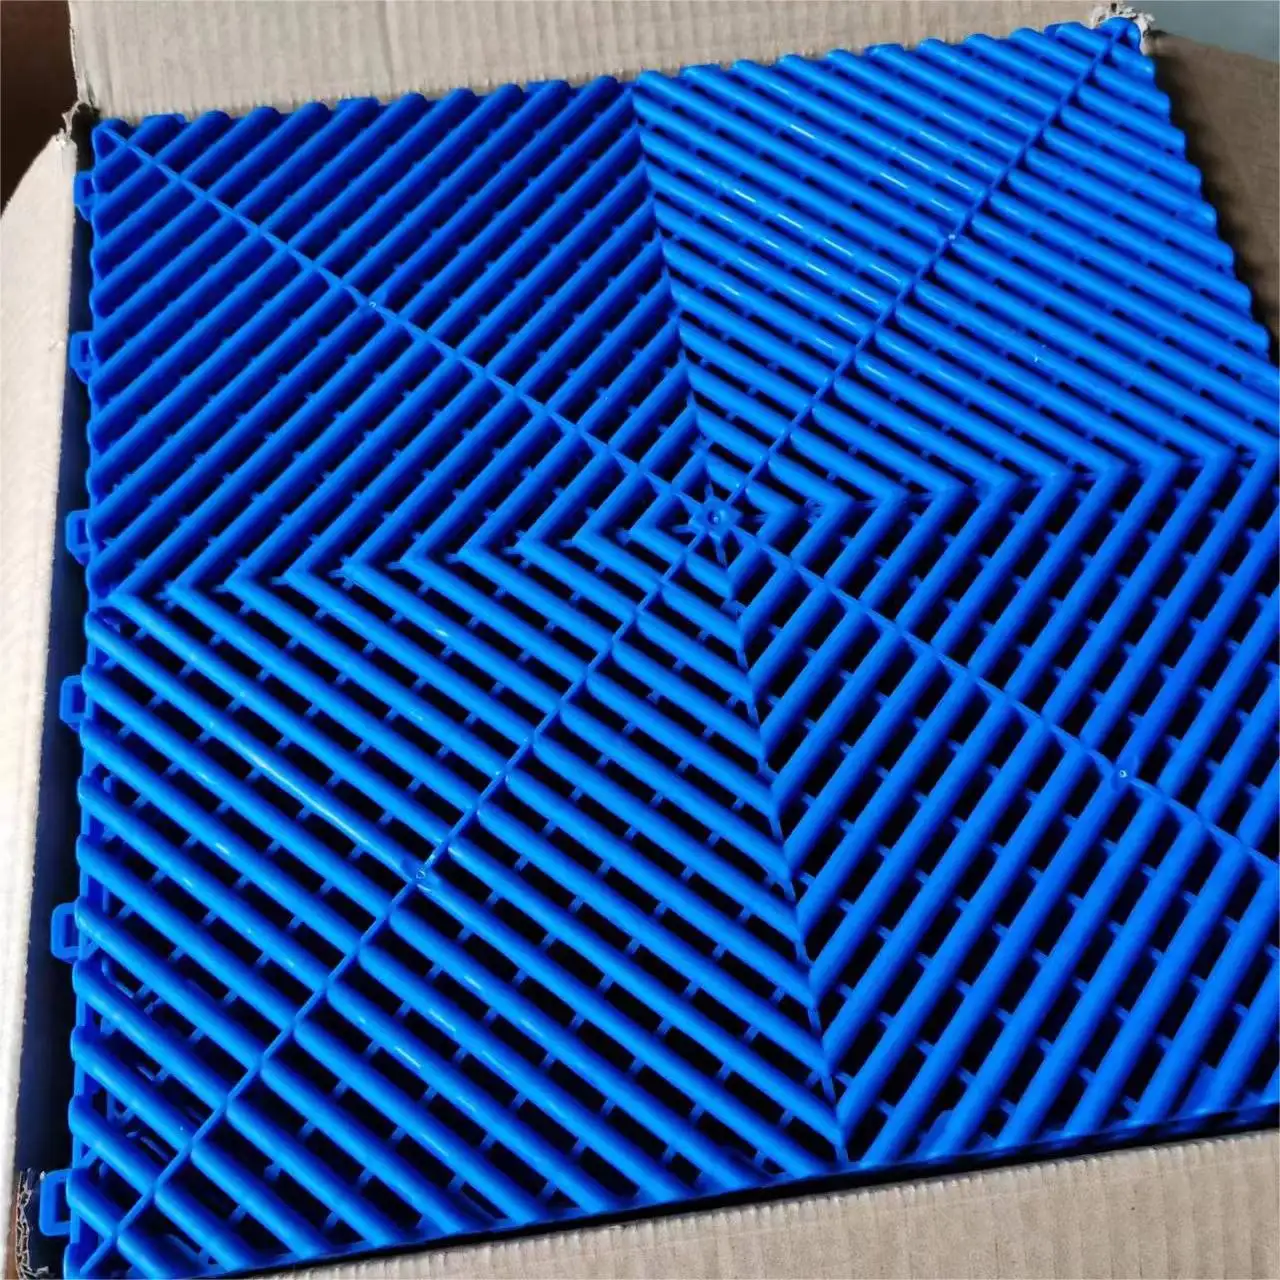 Free-Flow Open Rib Self-Draining Design Garage Flooring Tile Durable Copolymer Plastic Interlocking